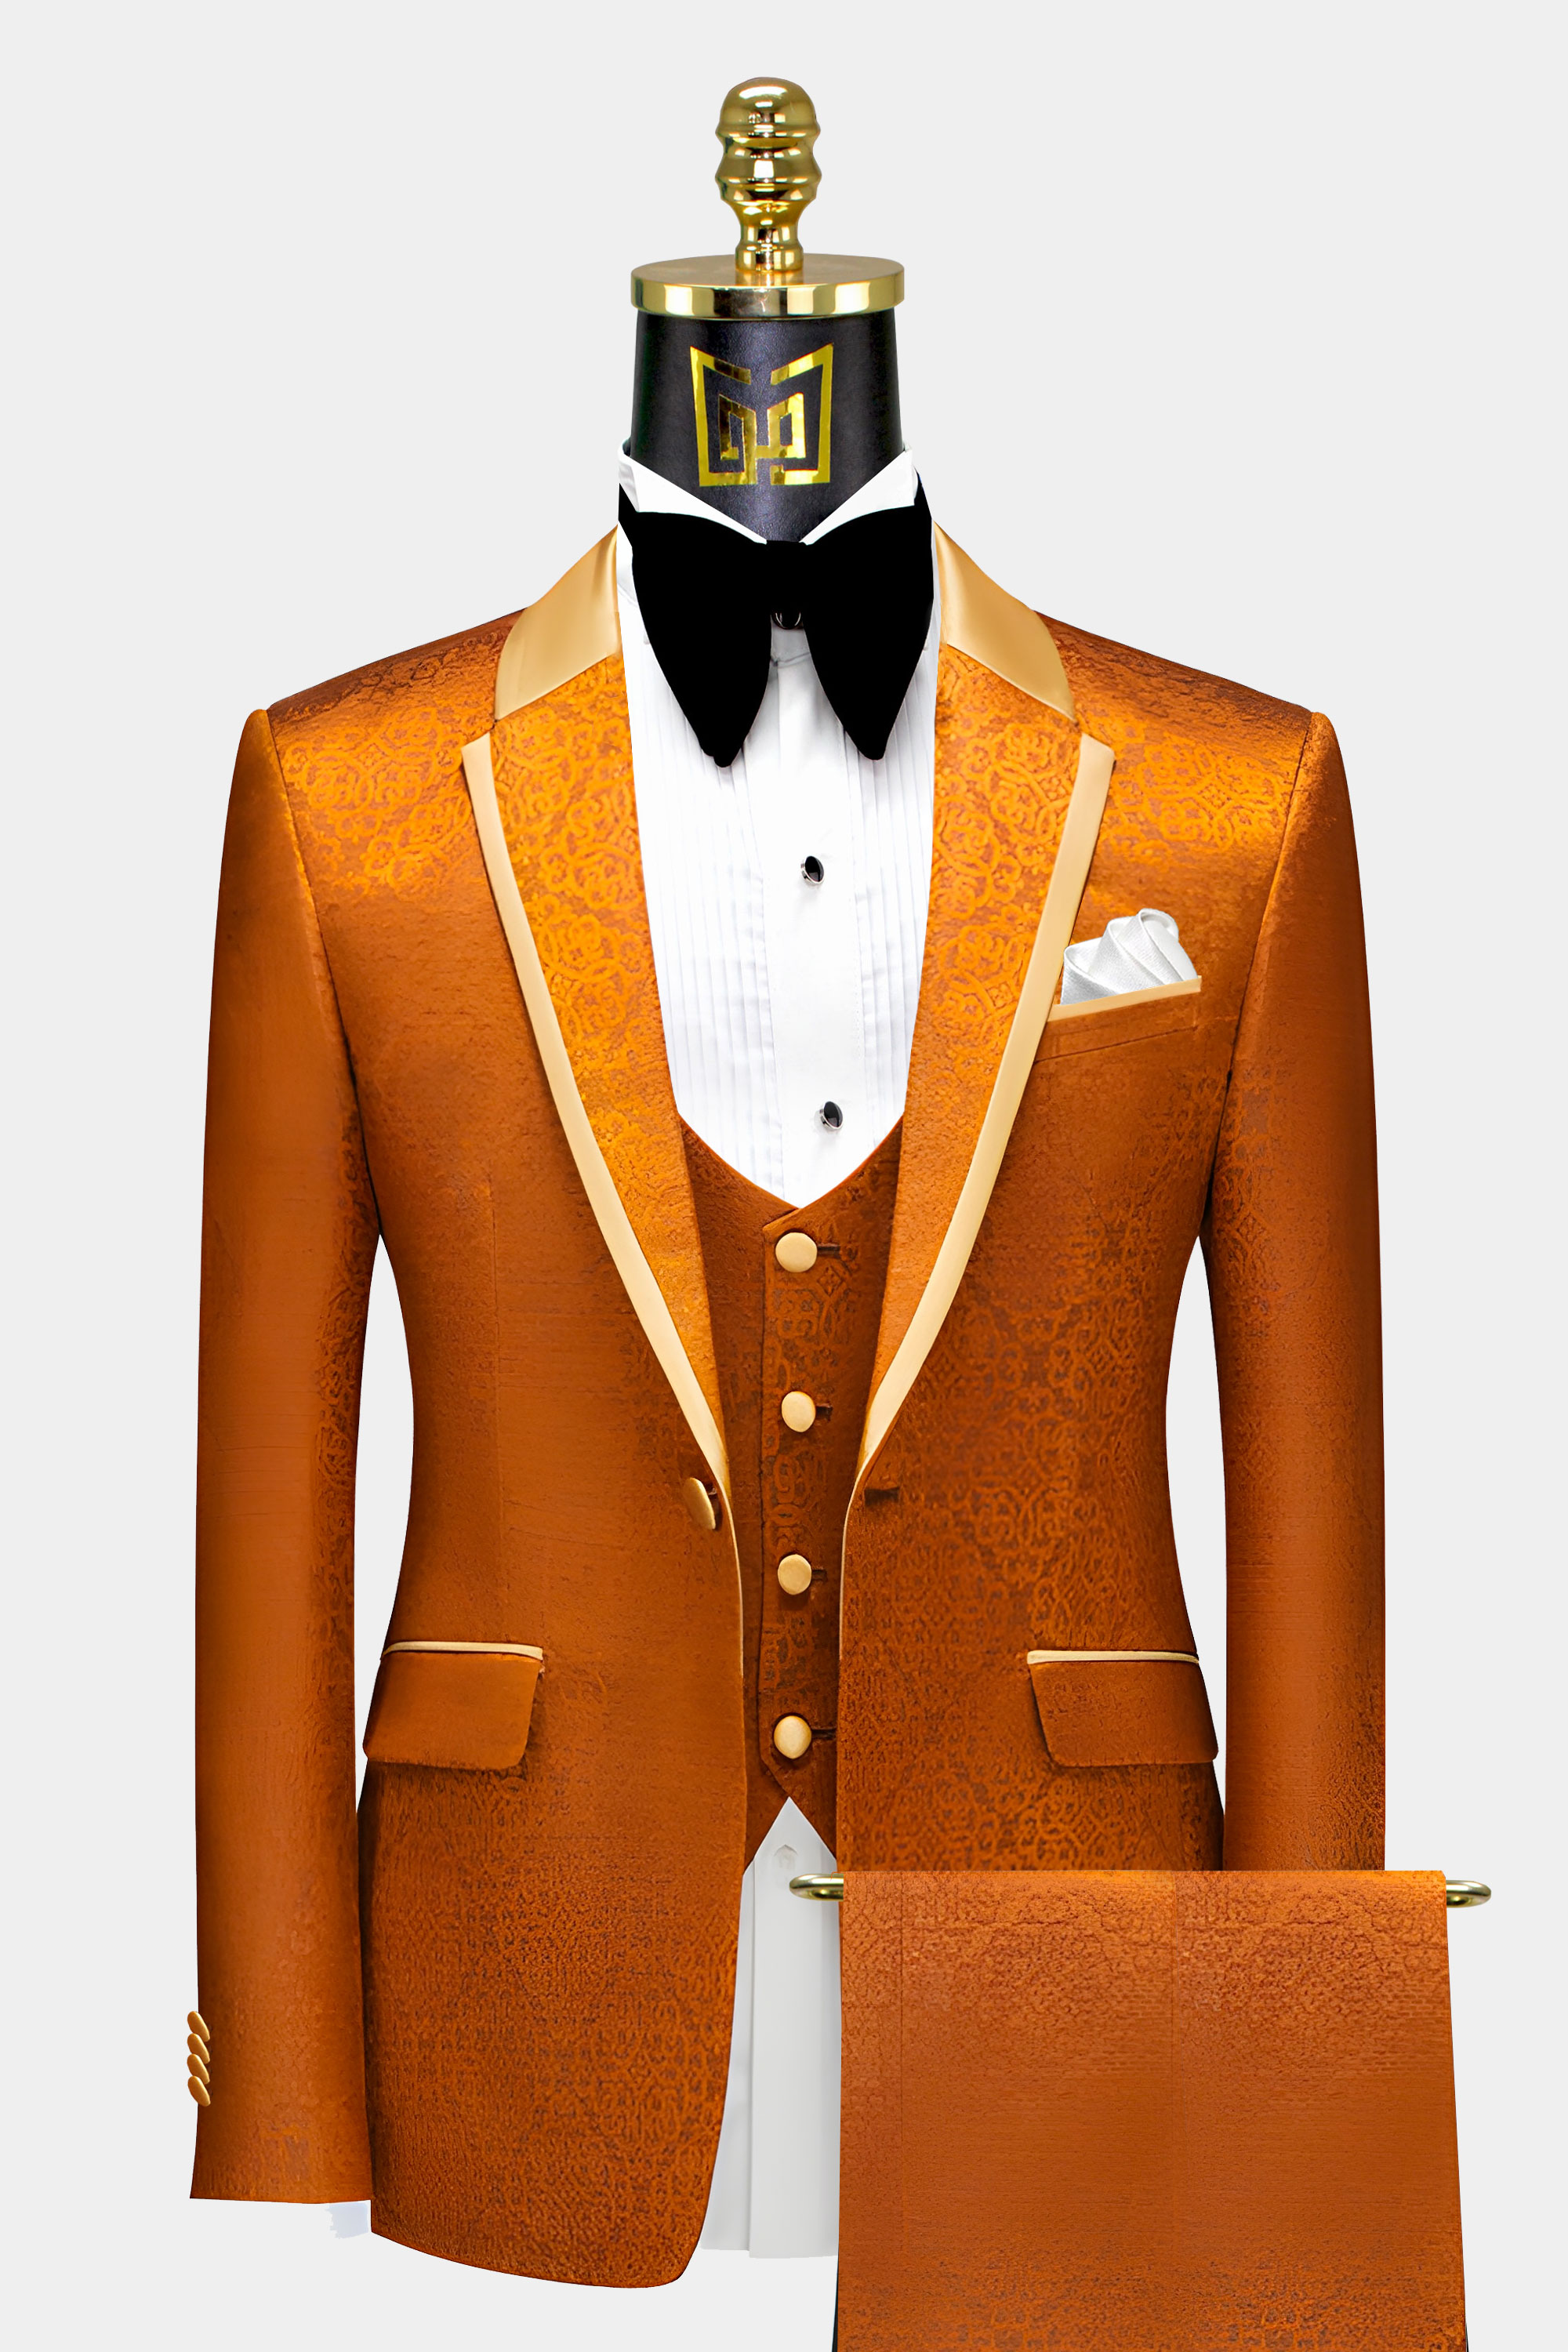 Trellis Orange Tuxedo - 3 Piece